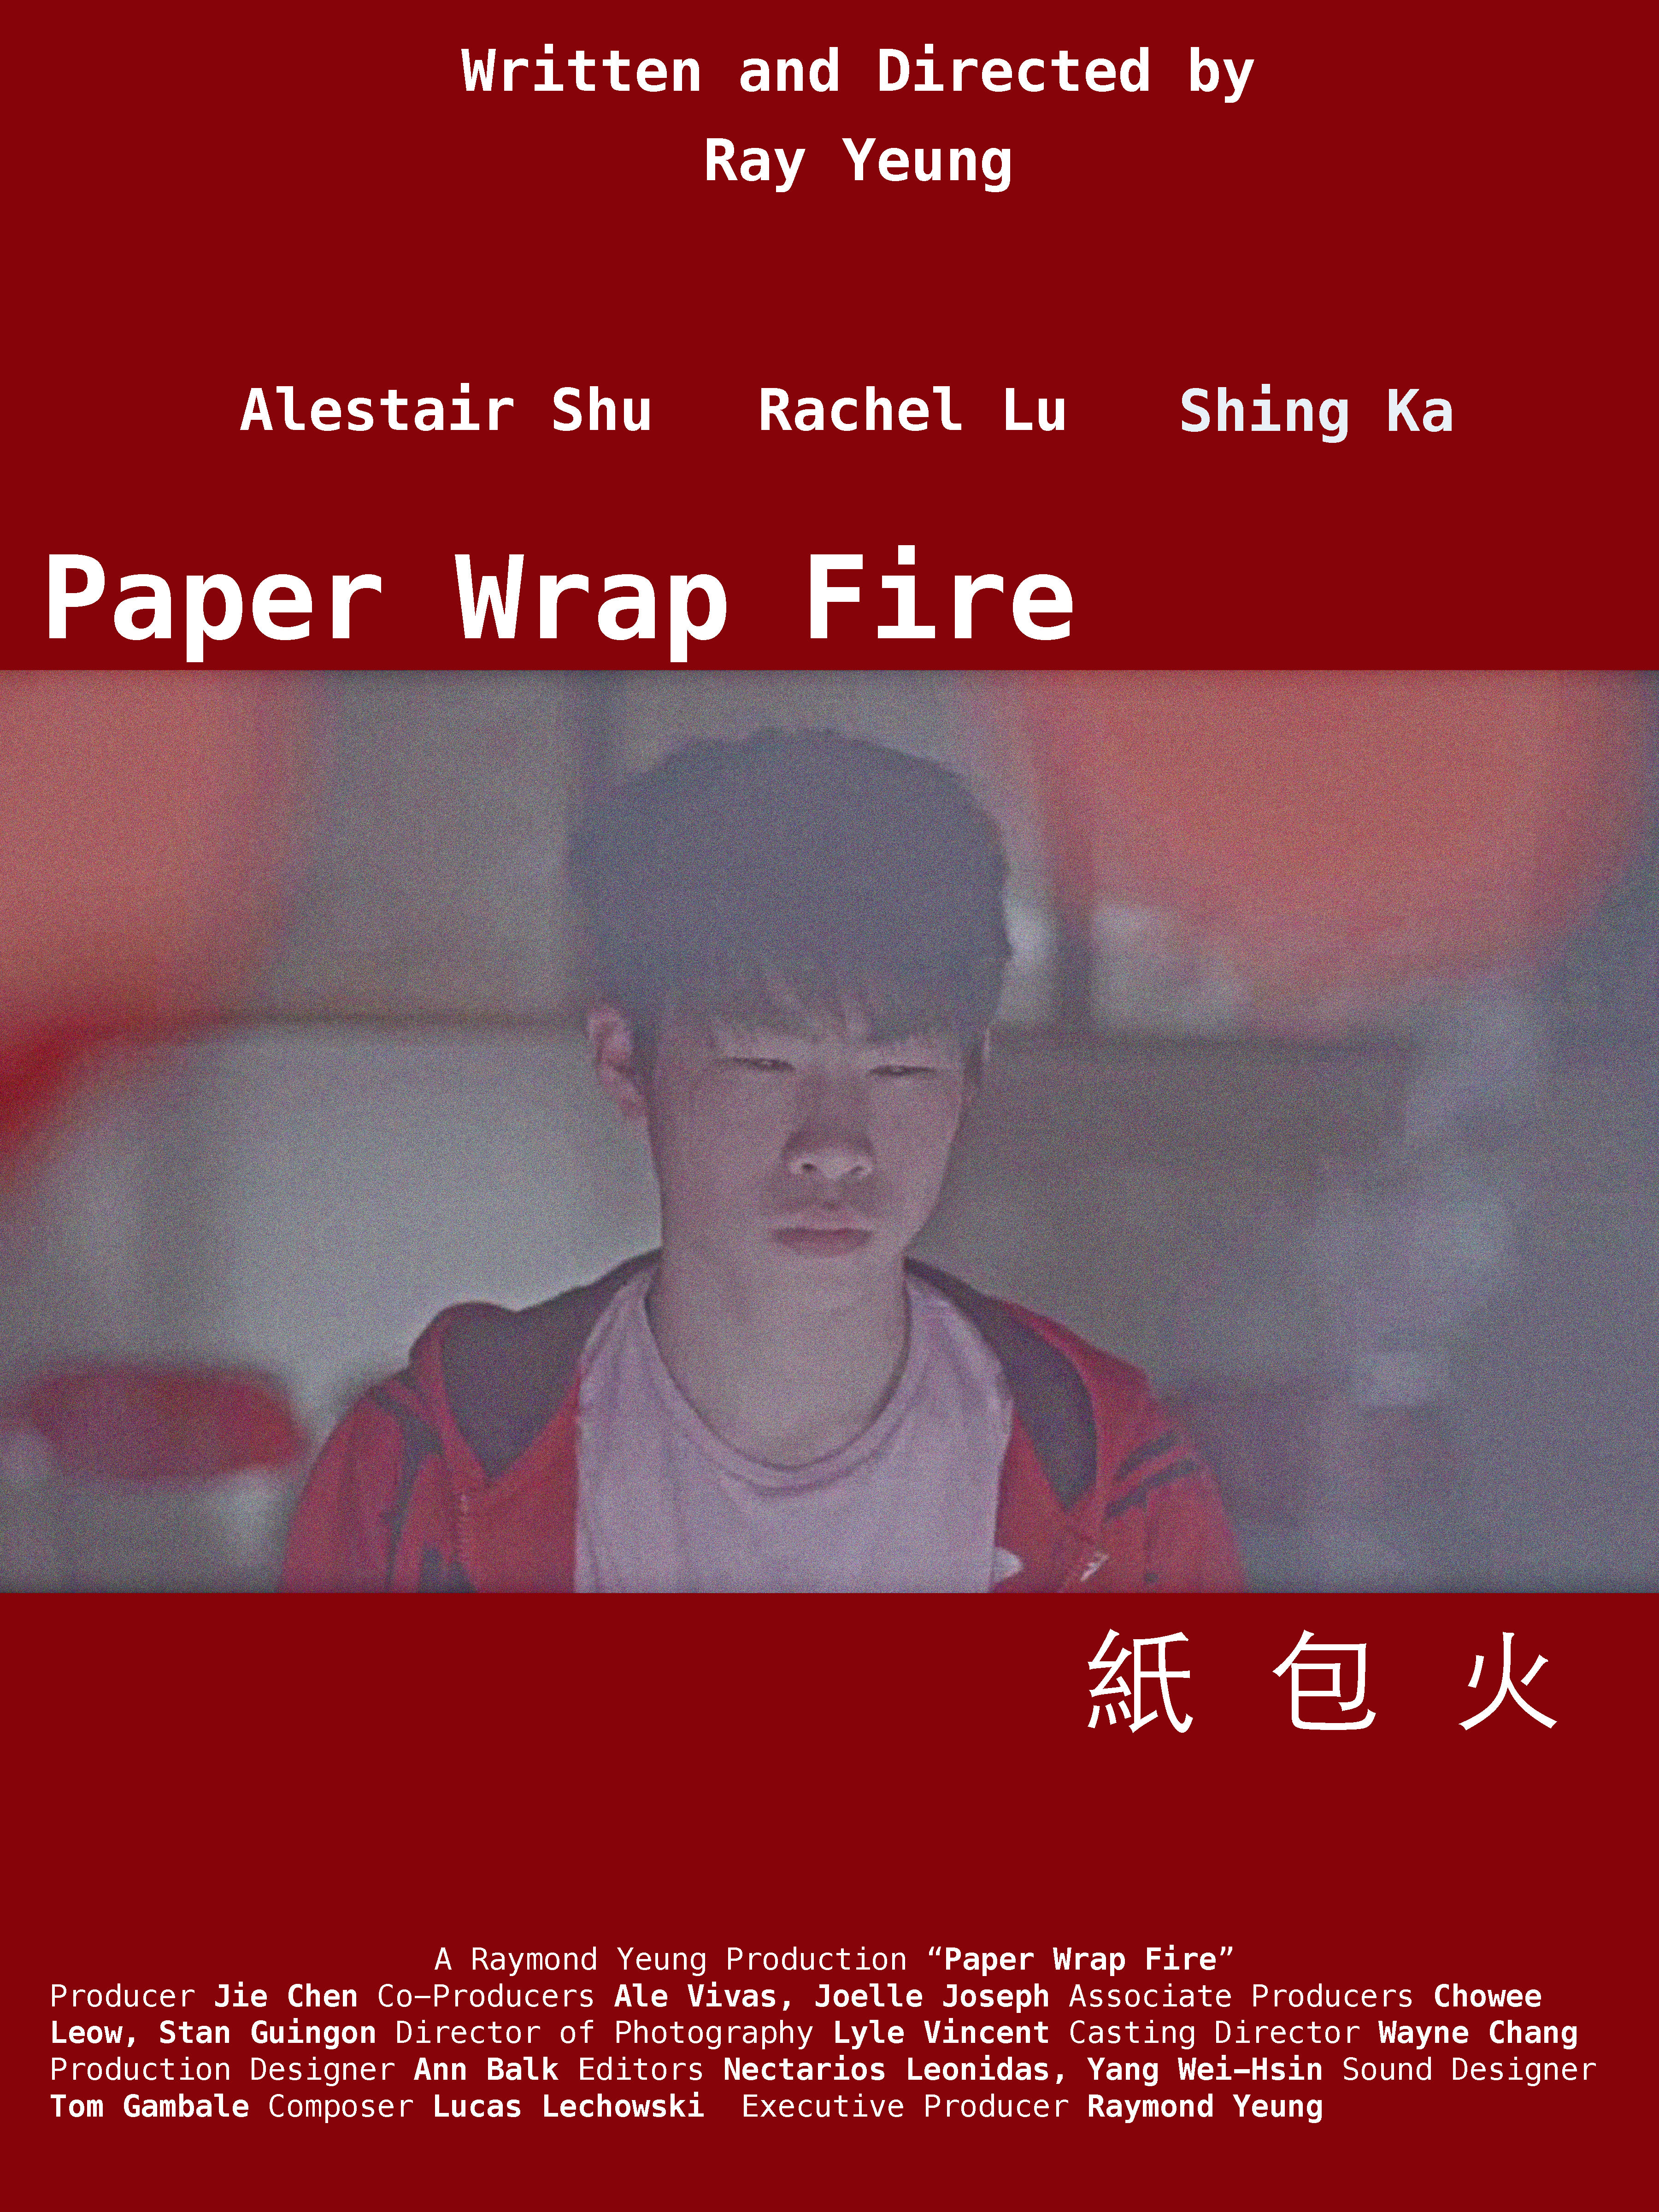 PAPER WRAP FIRE